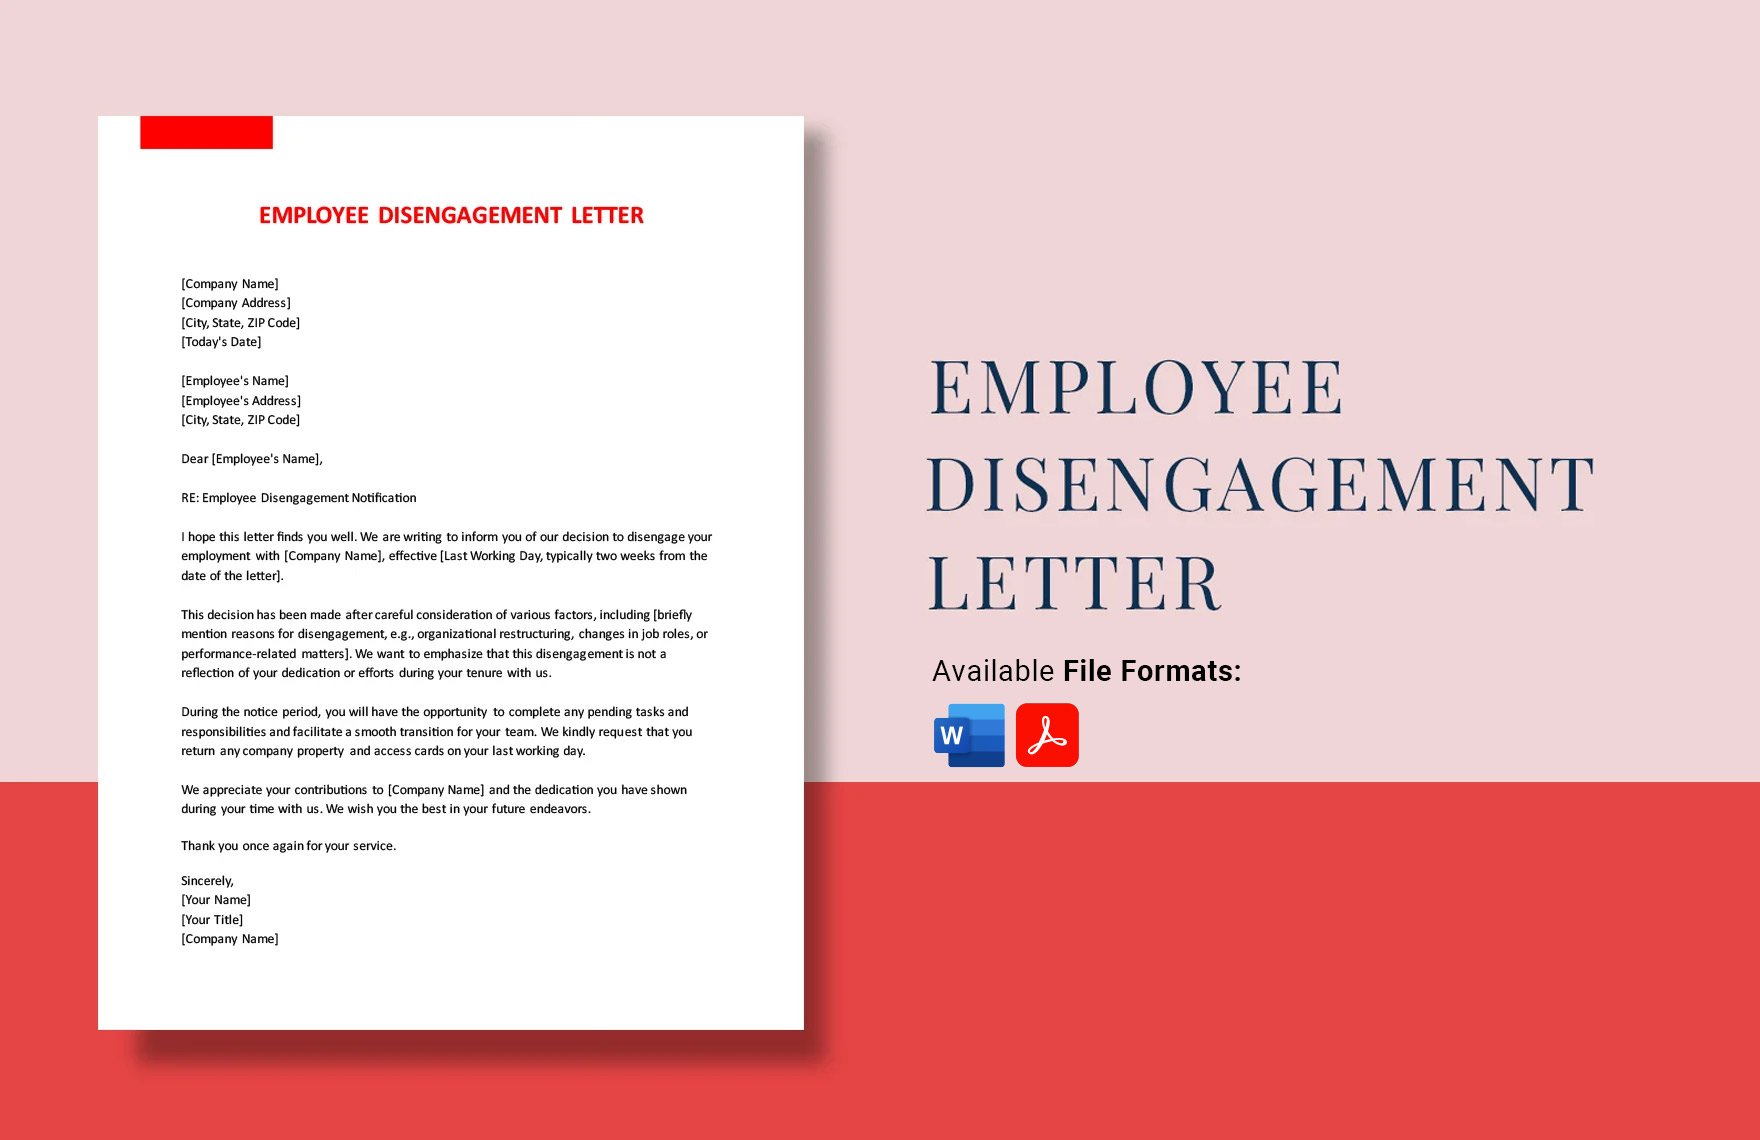 Employee Disengagement Letter